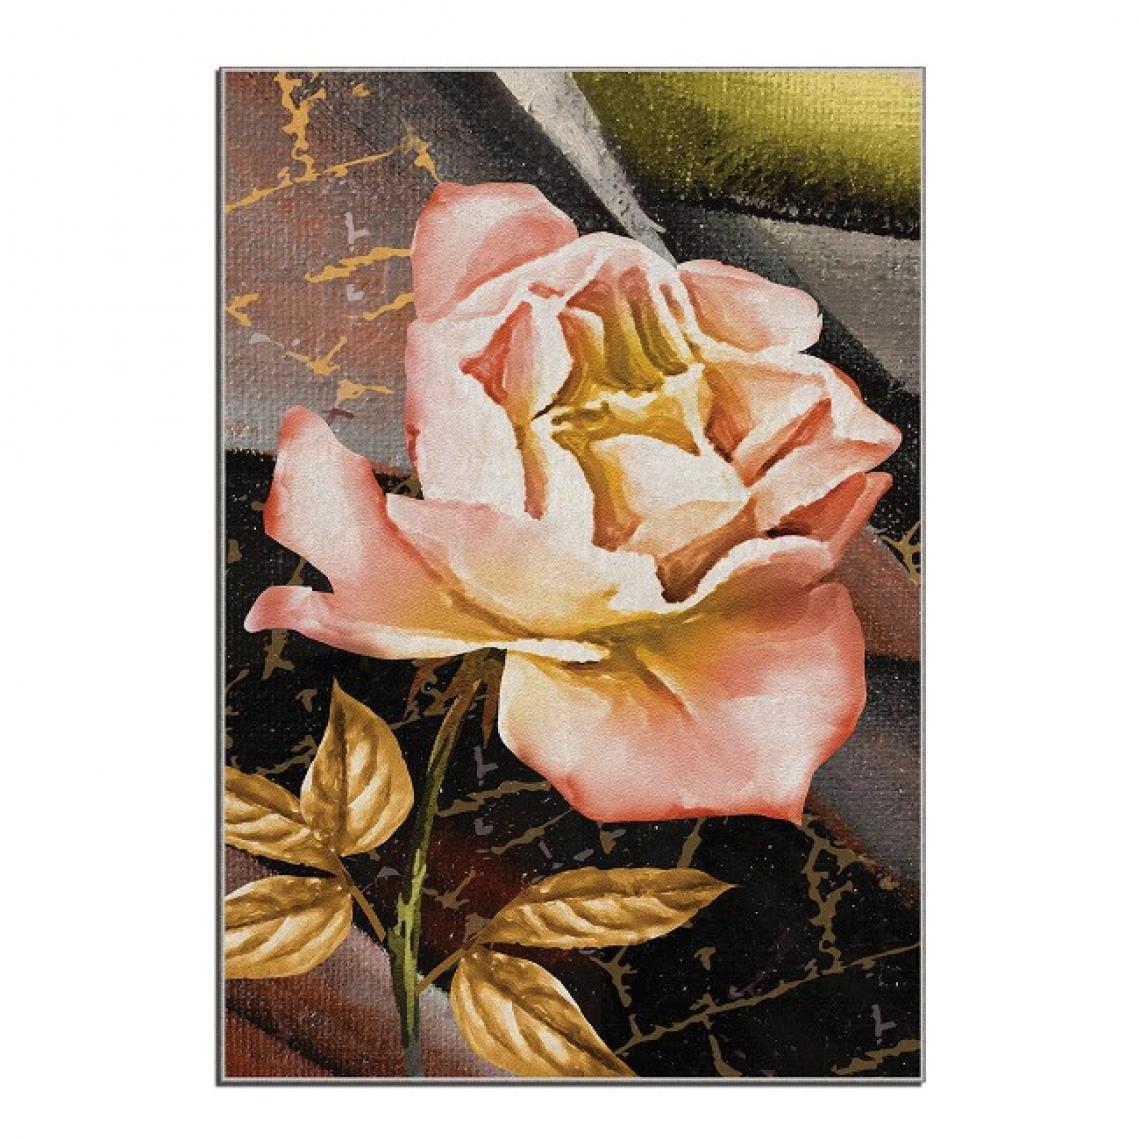 Homemania - HOMEMANIA Tapis décoratif Rose - Noir, Or, Rose - 180 x 280 cm - Tapis